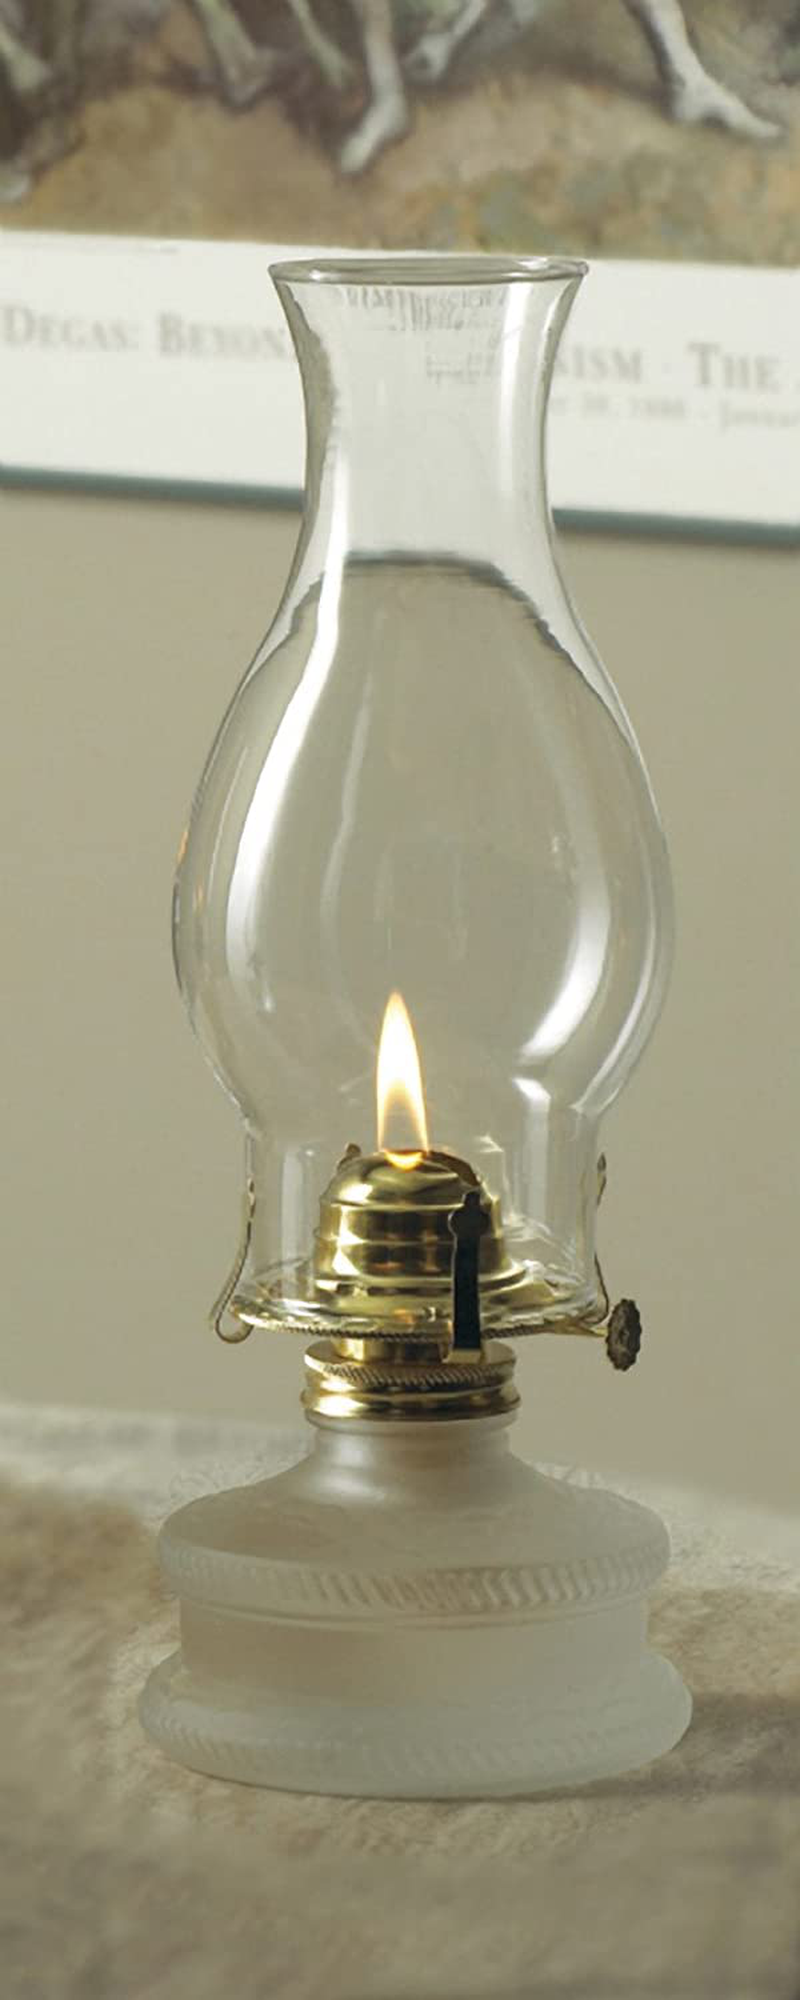 Lamplight Classic Oil Lamp Home & Garden > Lighting Accessories > Oil Lamp Fuel Lamplight   